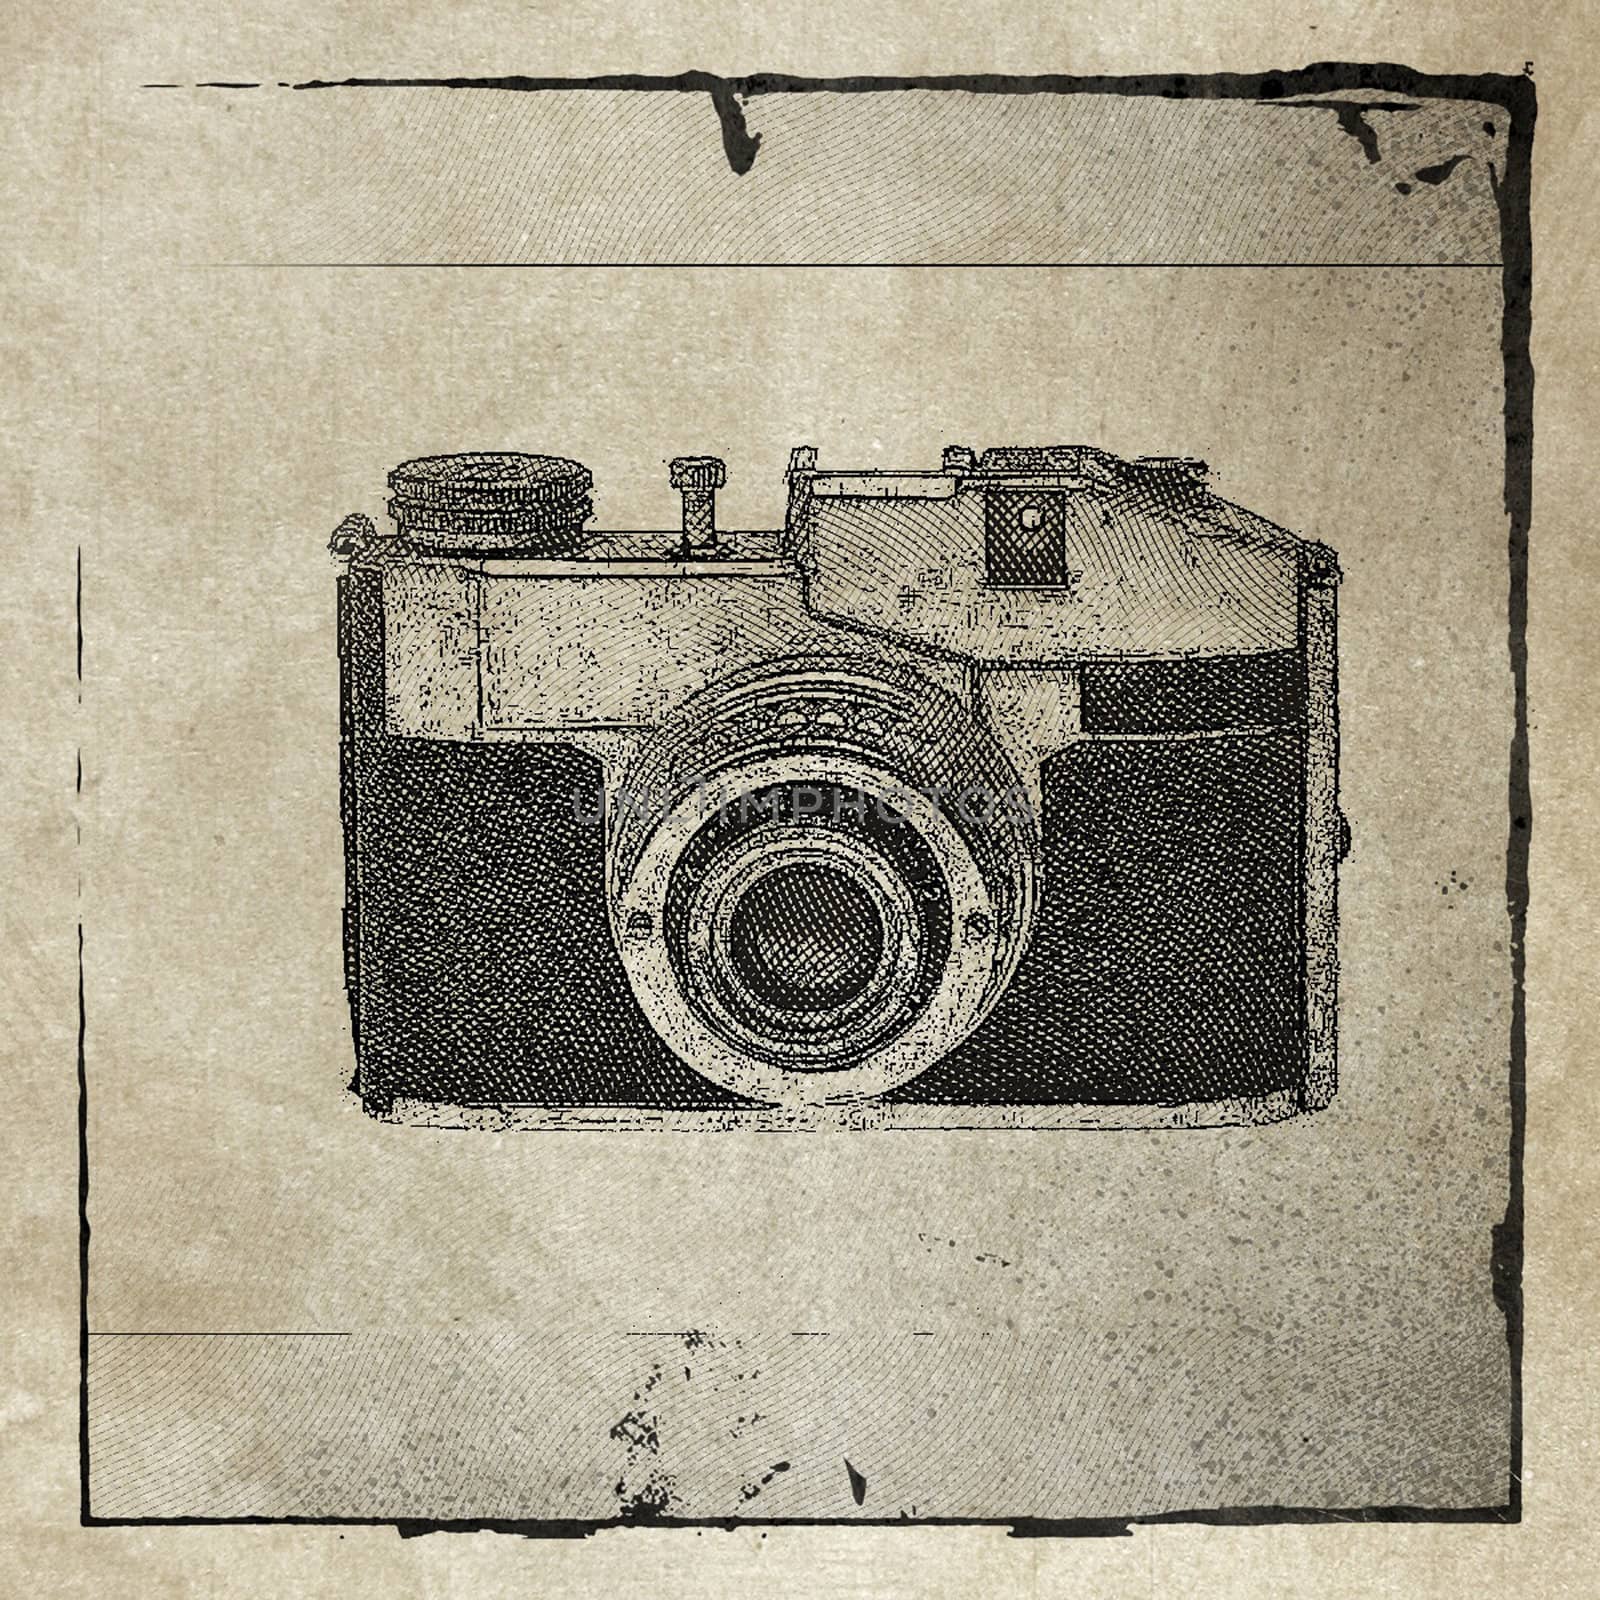 illustration of an old camera